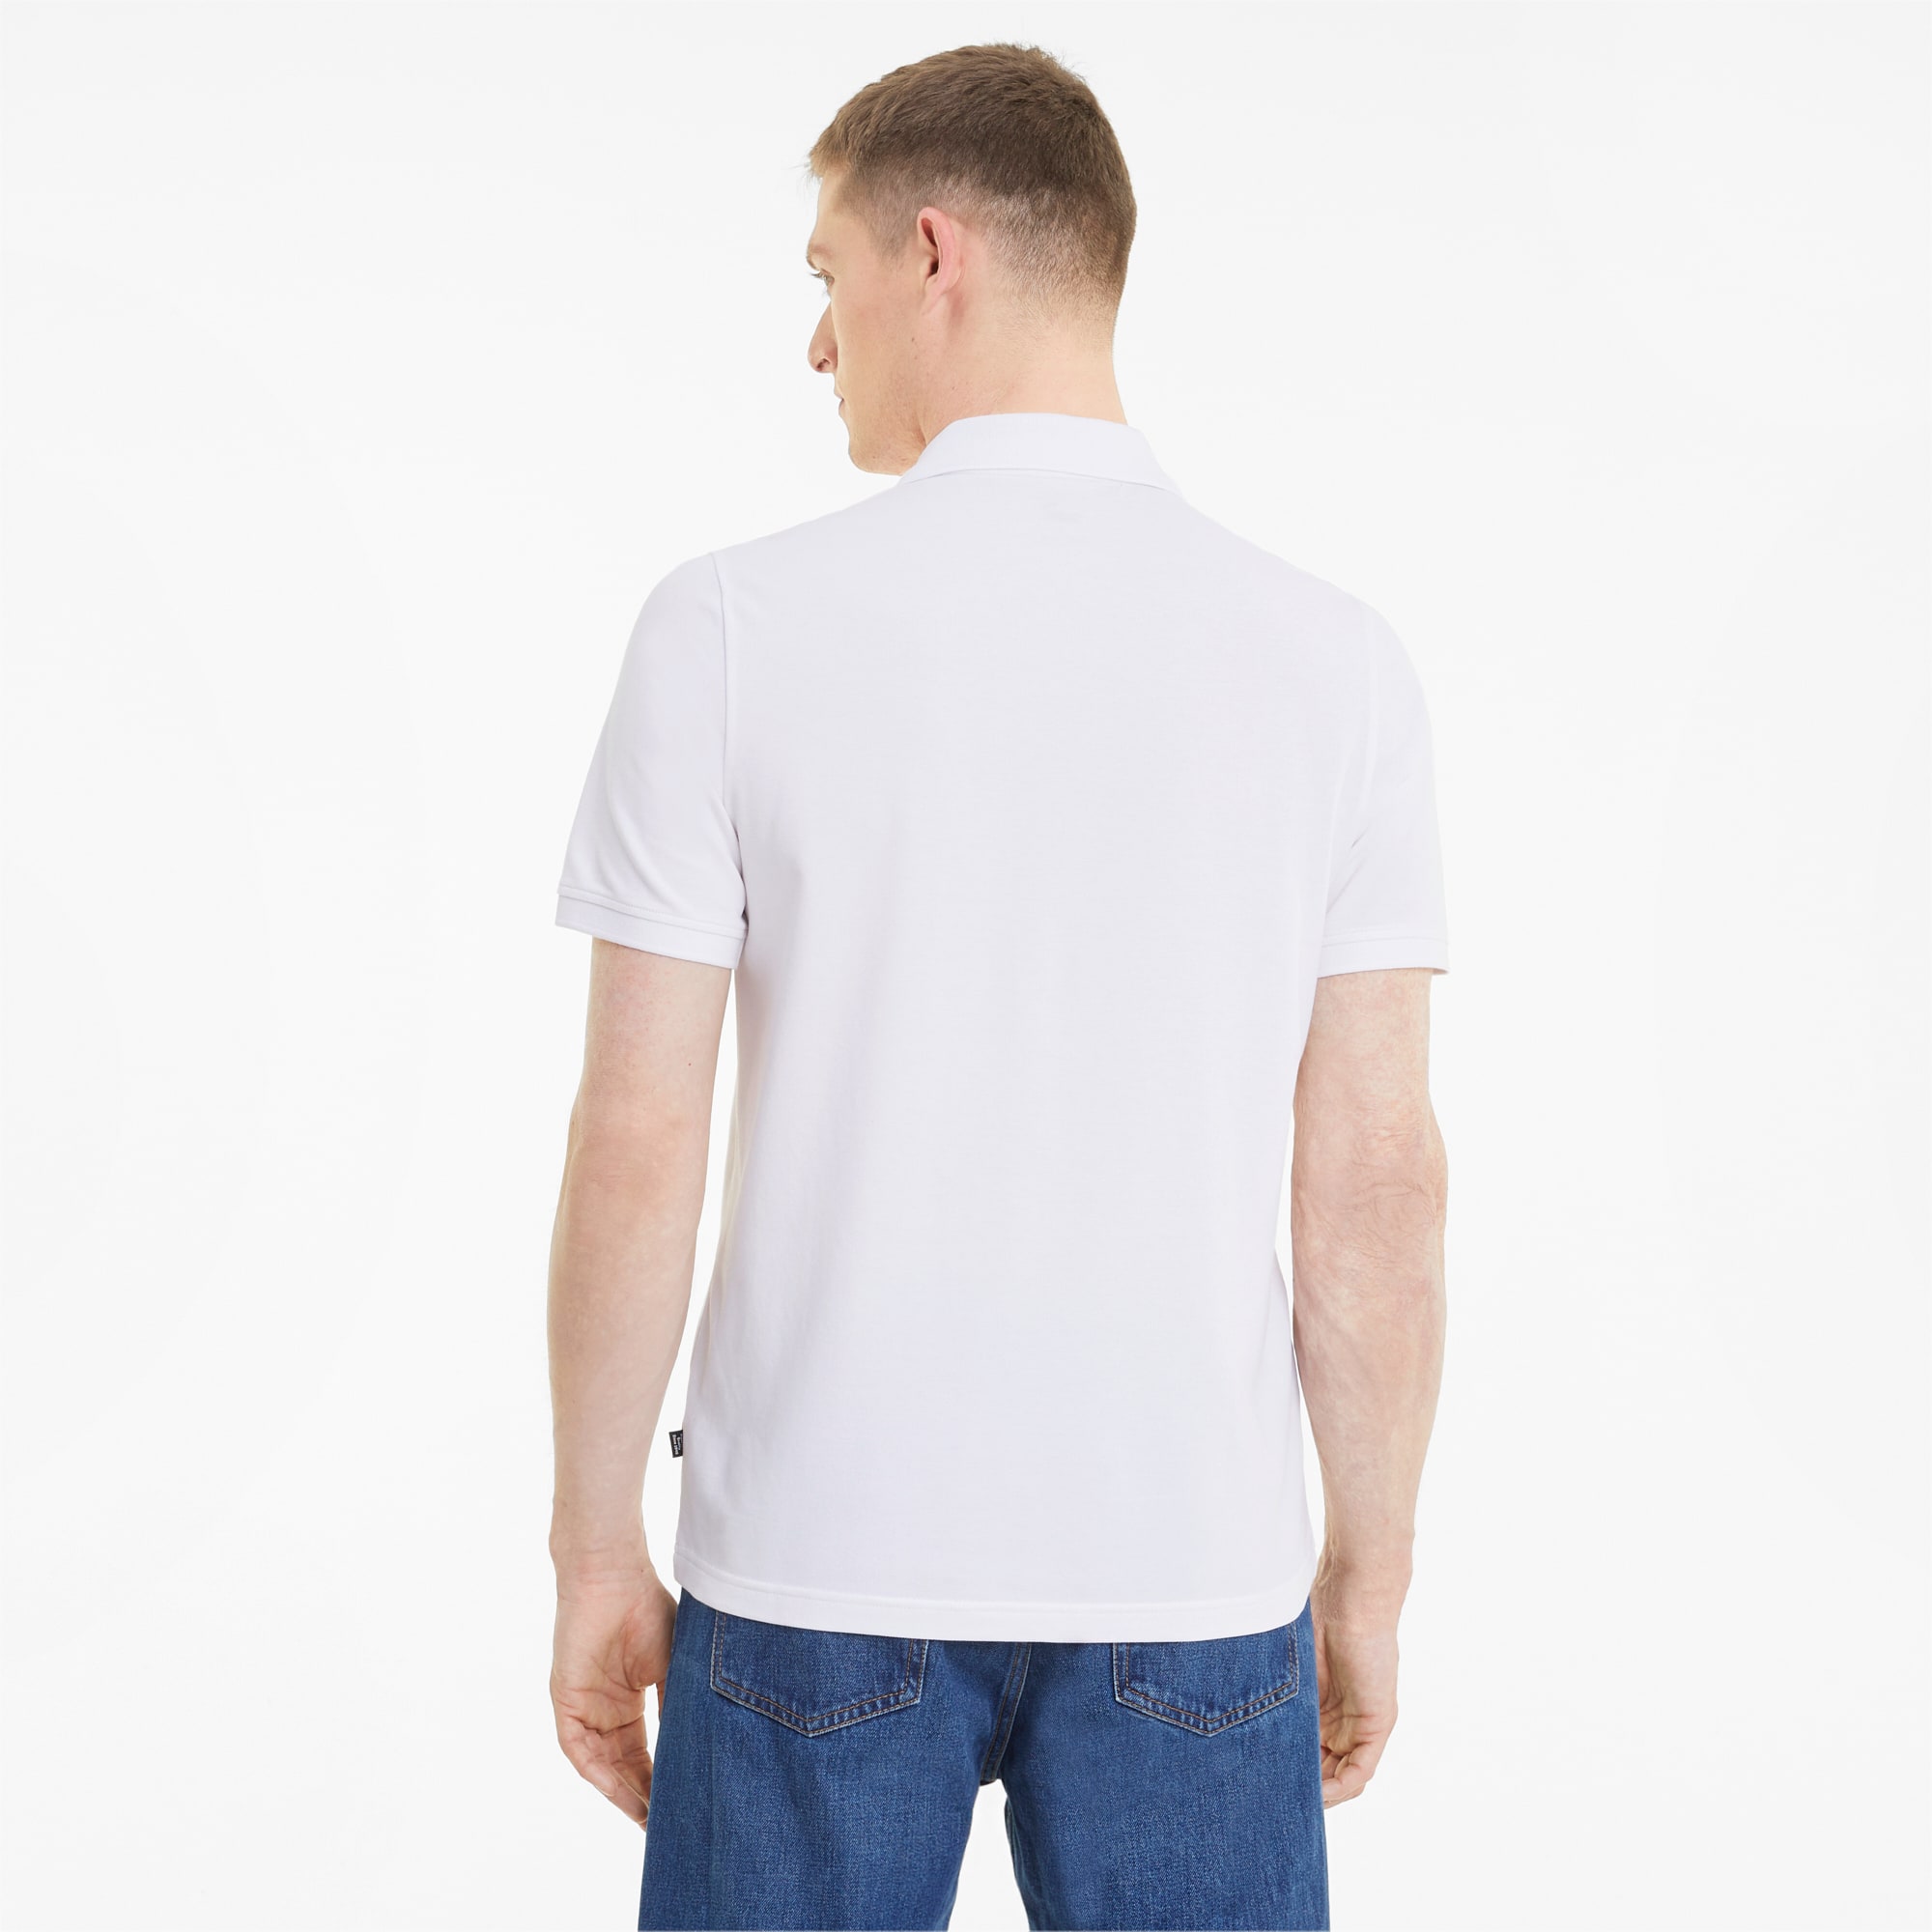 PUMA Essentials Pique Men's Polo Shirt, White, Size XS, Clothing